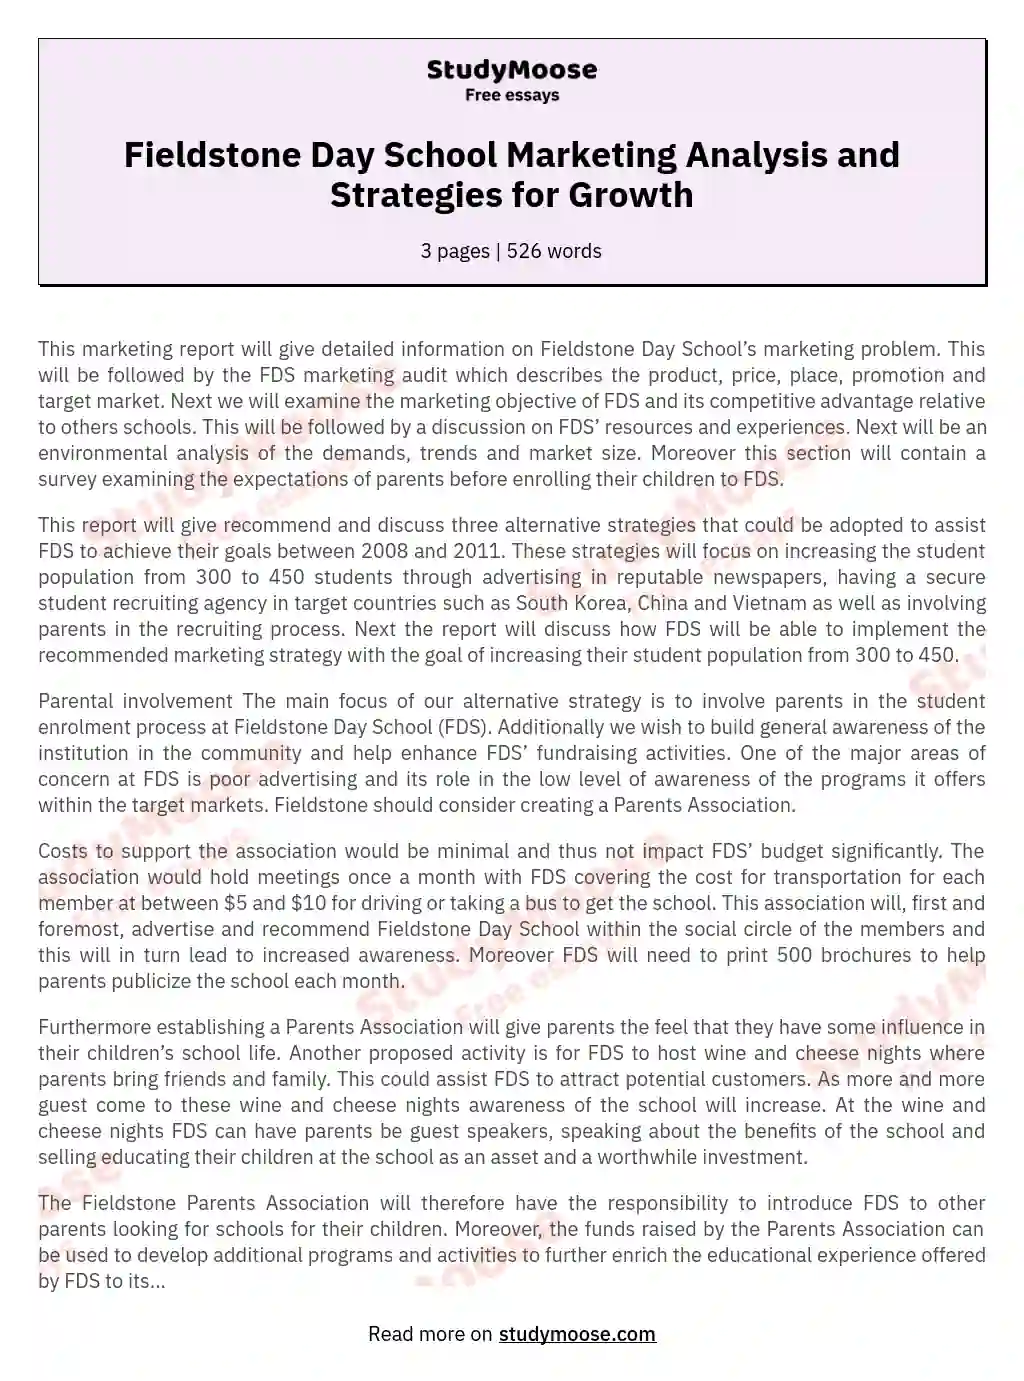 Fieldstone Day School Marketing Analysis and Strategies for Growth essay